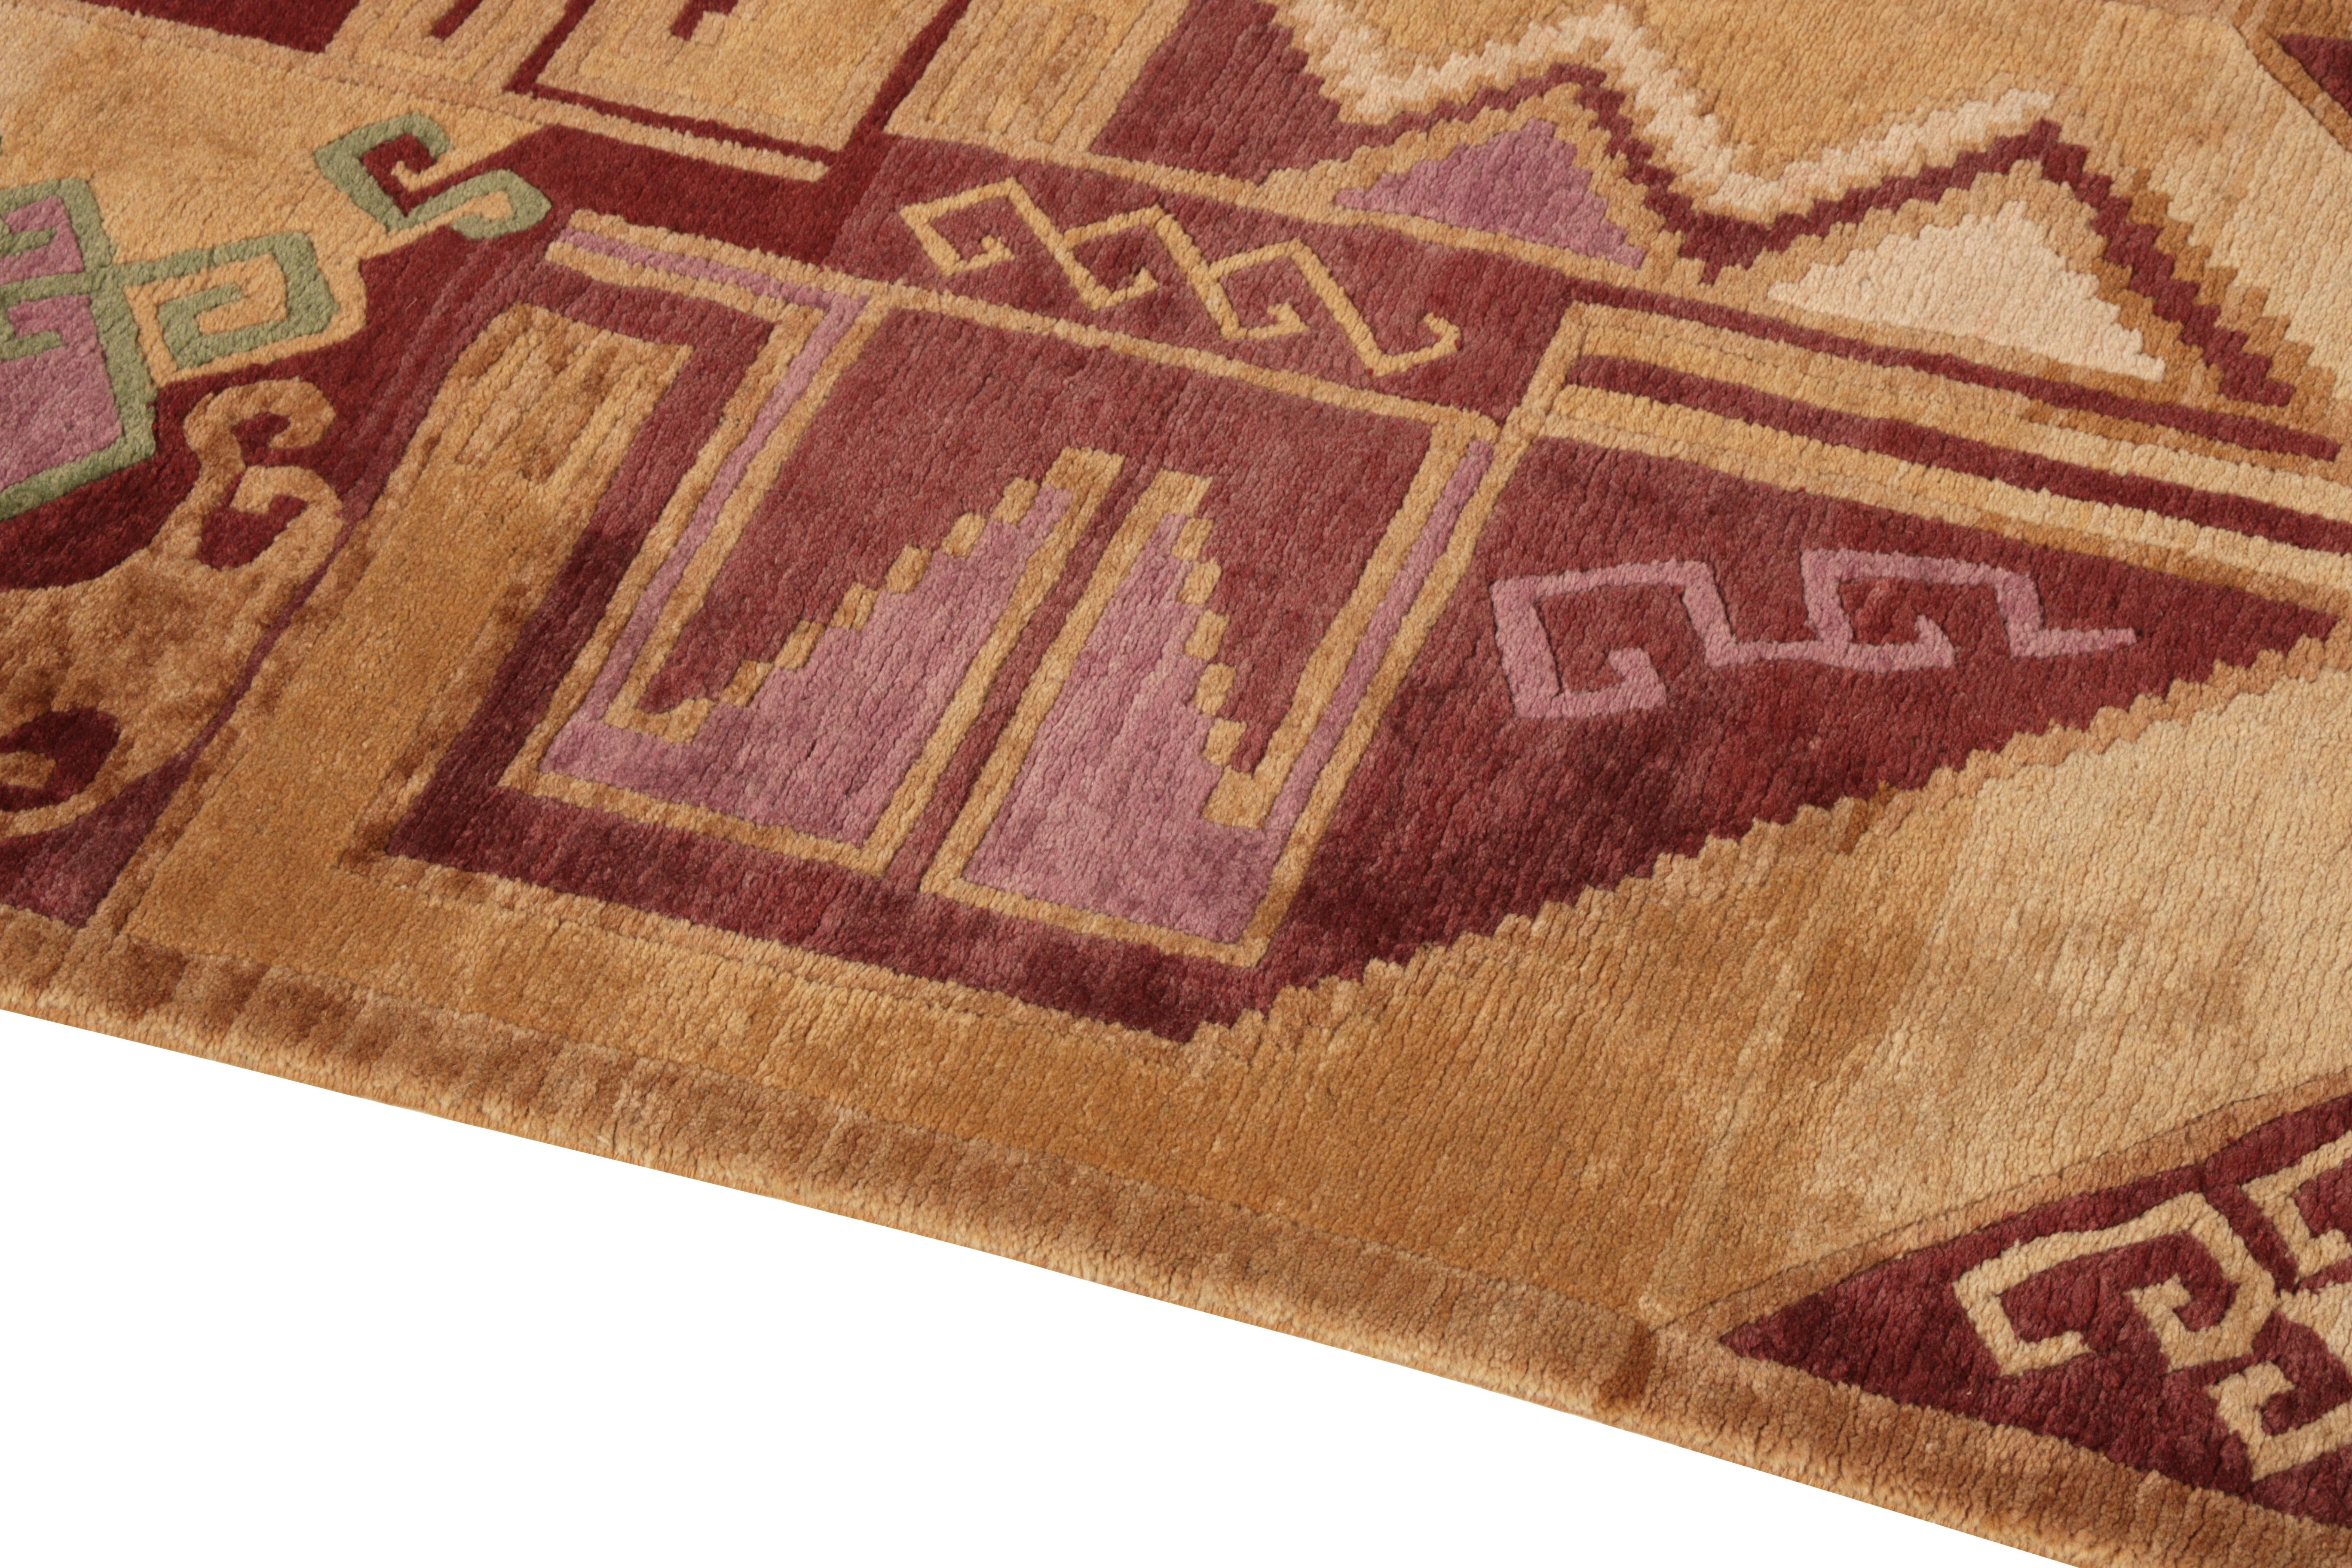 Hand-Knotted Rug & Kilim's Aztec Inspired Runner Beige-Brown Maroon Tribal Rug